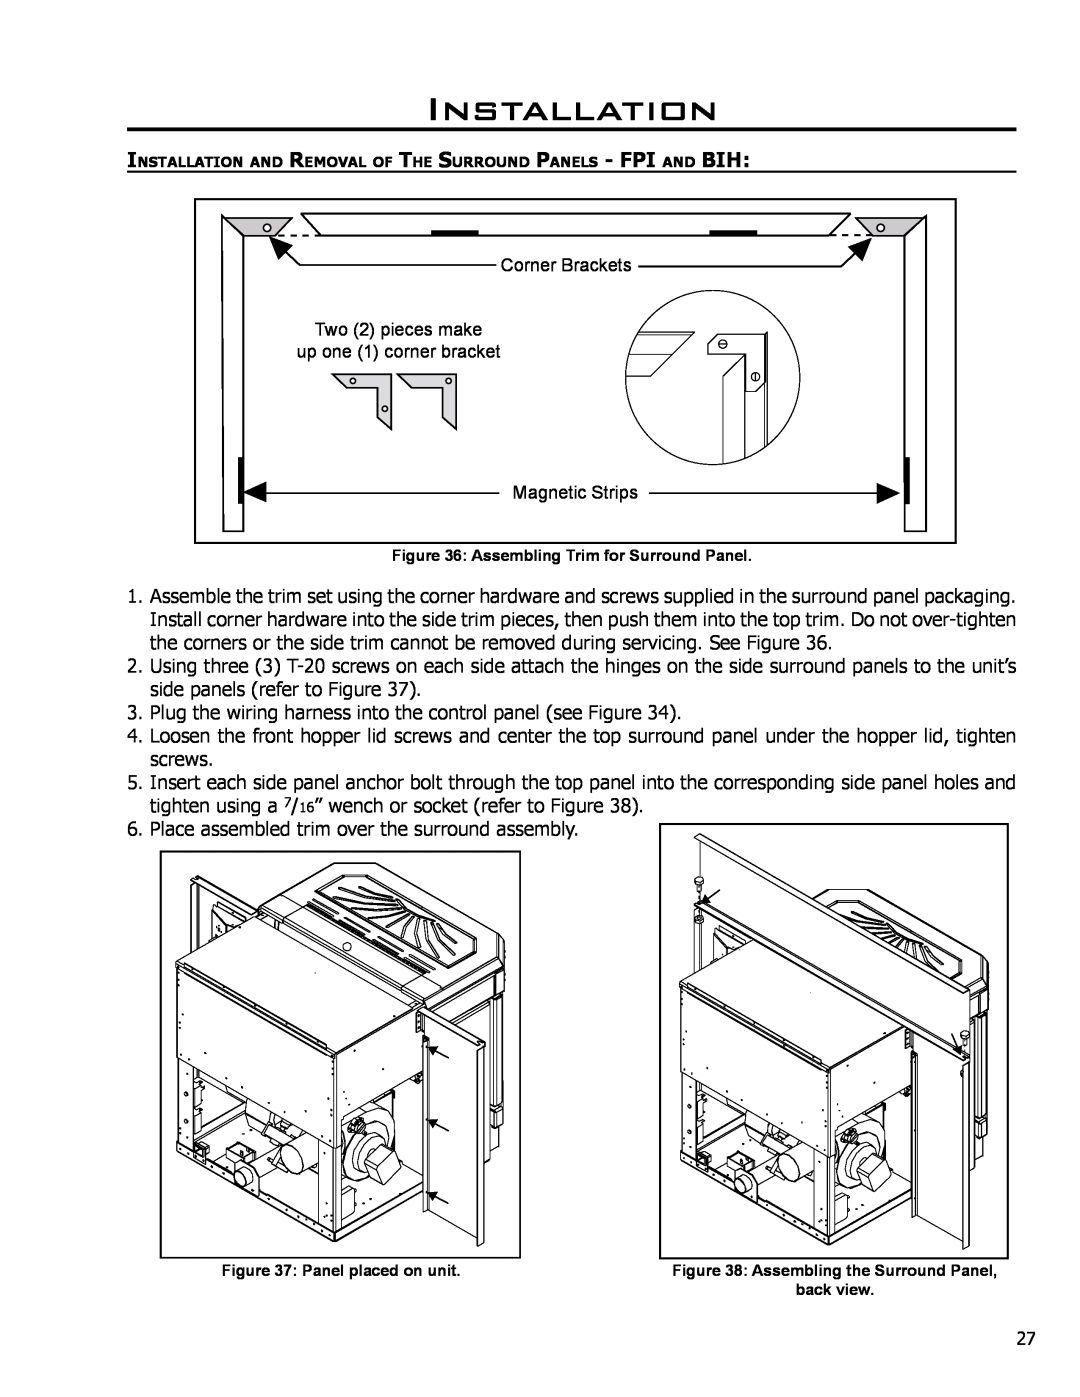 Enviro EF3 owner manual Installation, Corner Brackets, Two 2 pieces make, up one 1 corner bracket, Magnetic Strips 